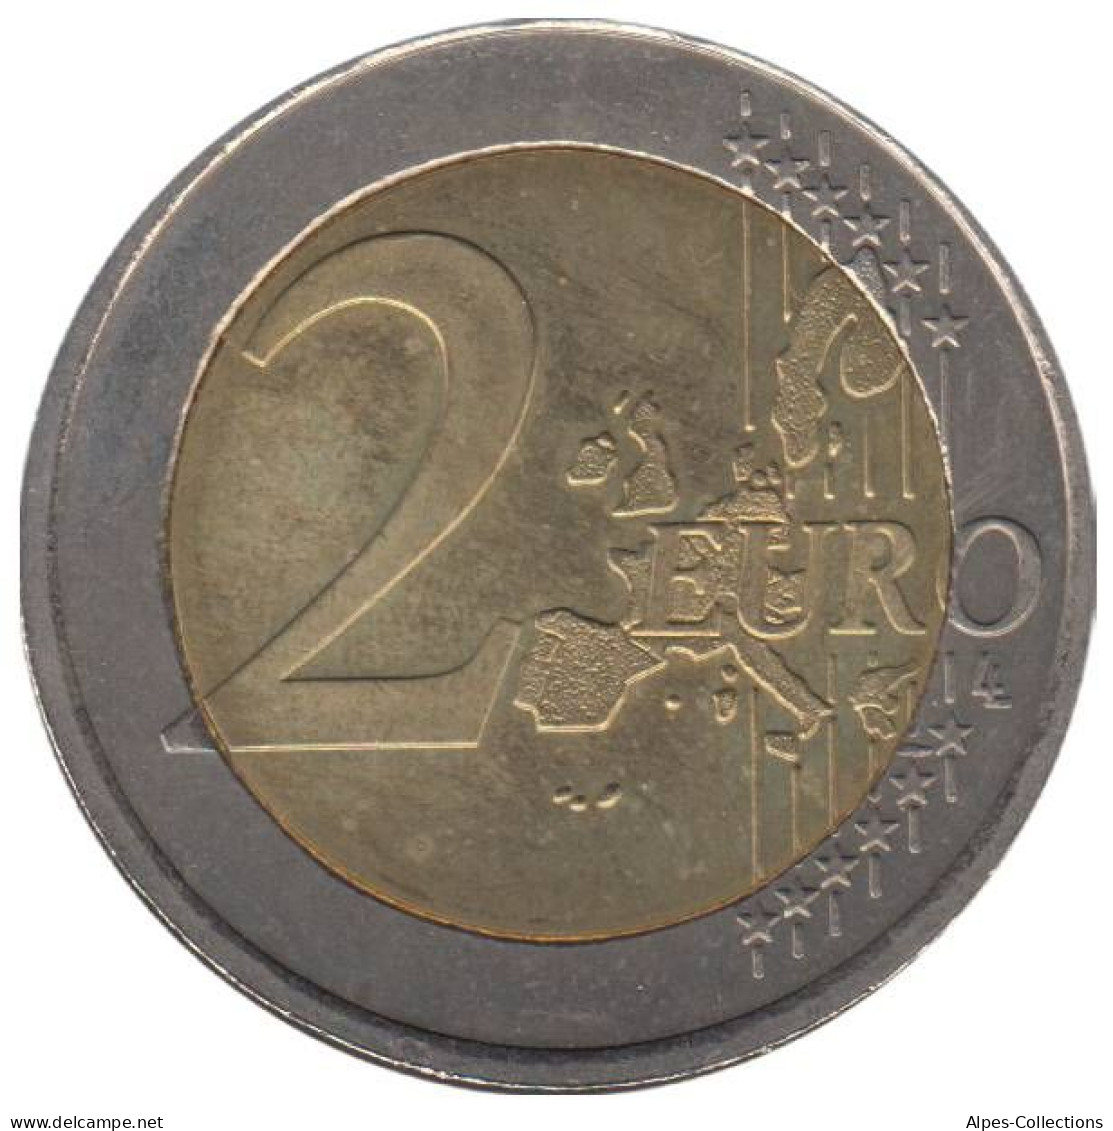 IR20005.1 - IRLANDE - 2 Euros - 2005 - Ierland